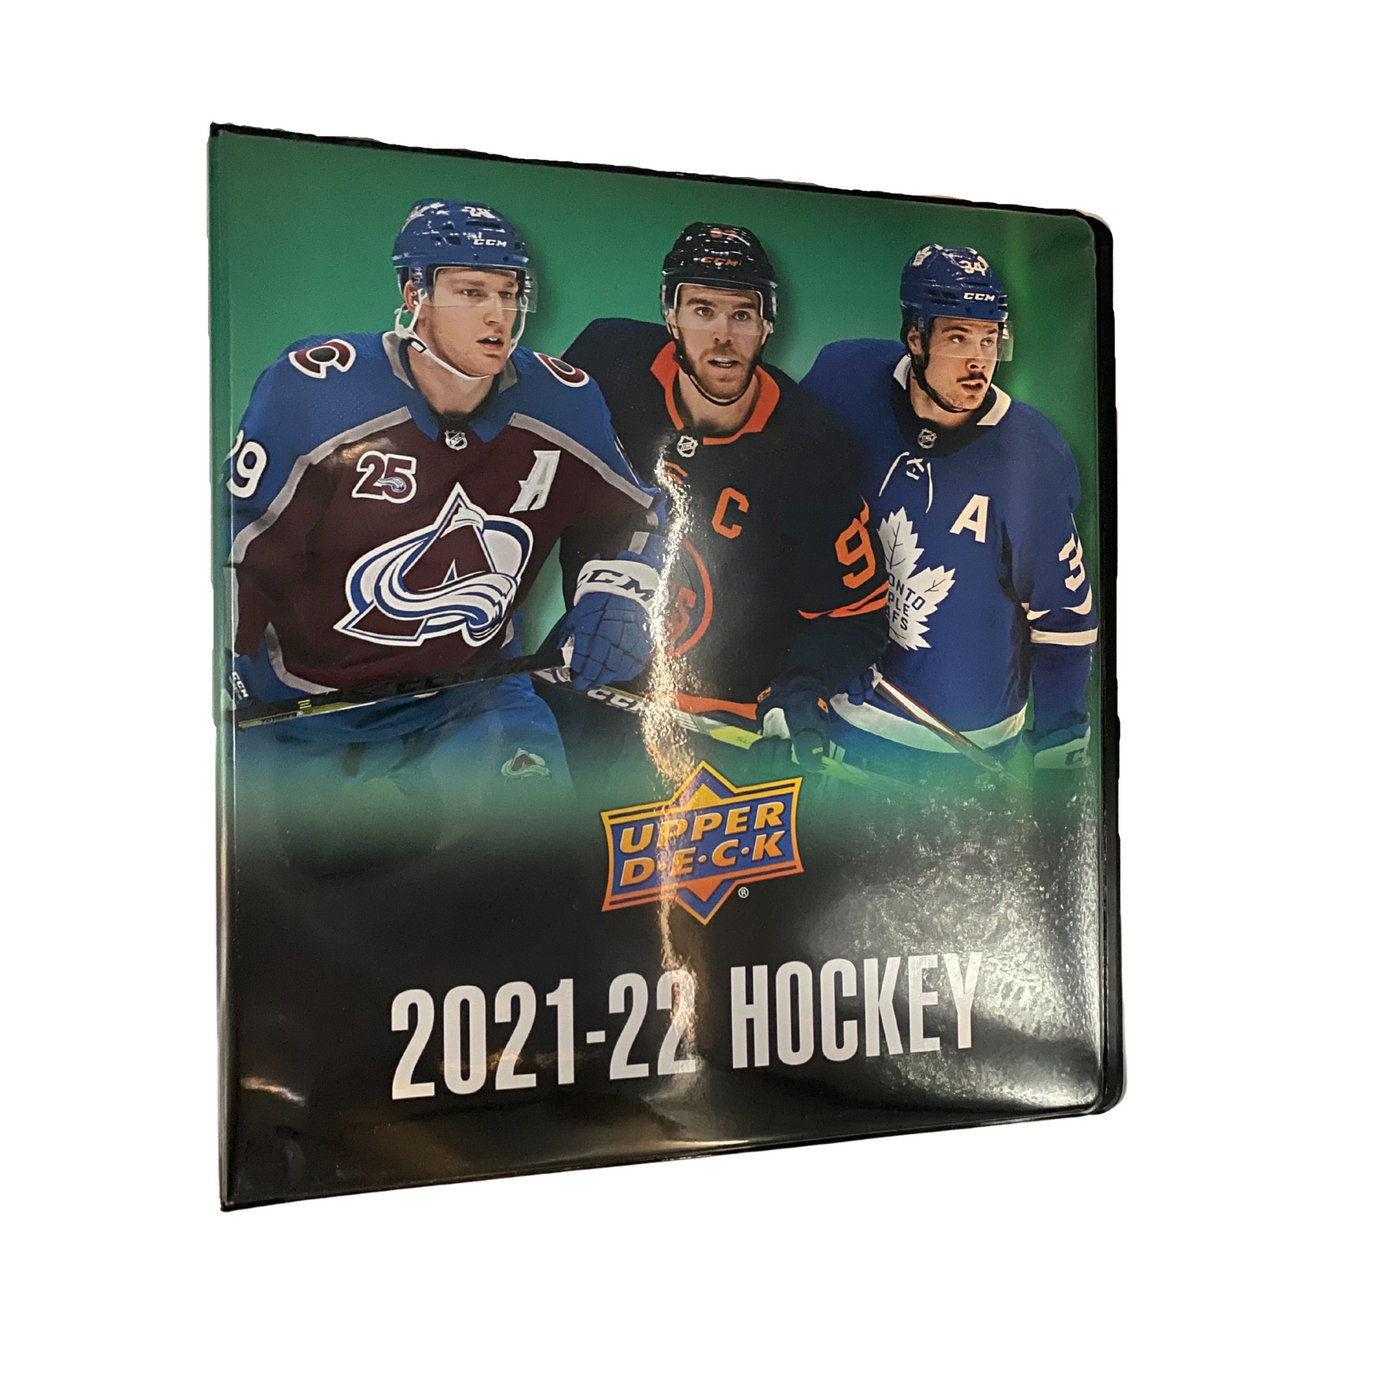 Binder - Upper Deck 2021-22 Hockey Card Album